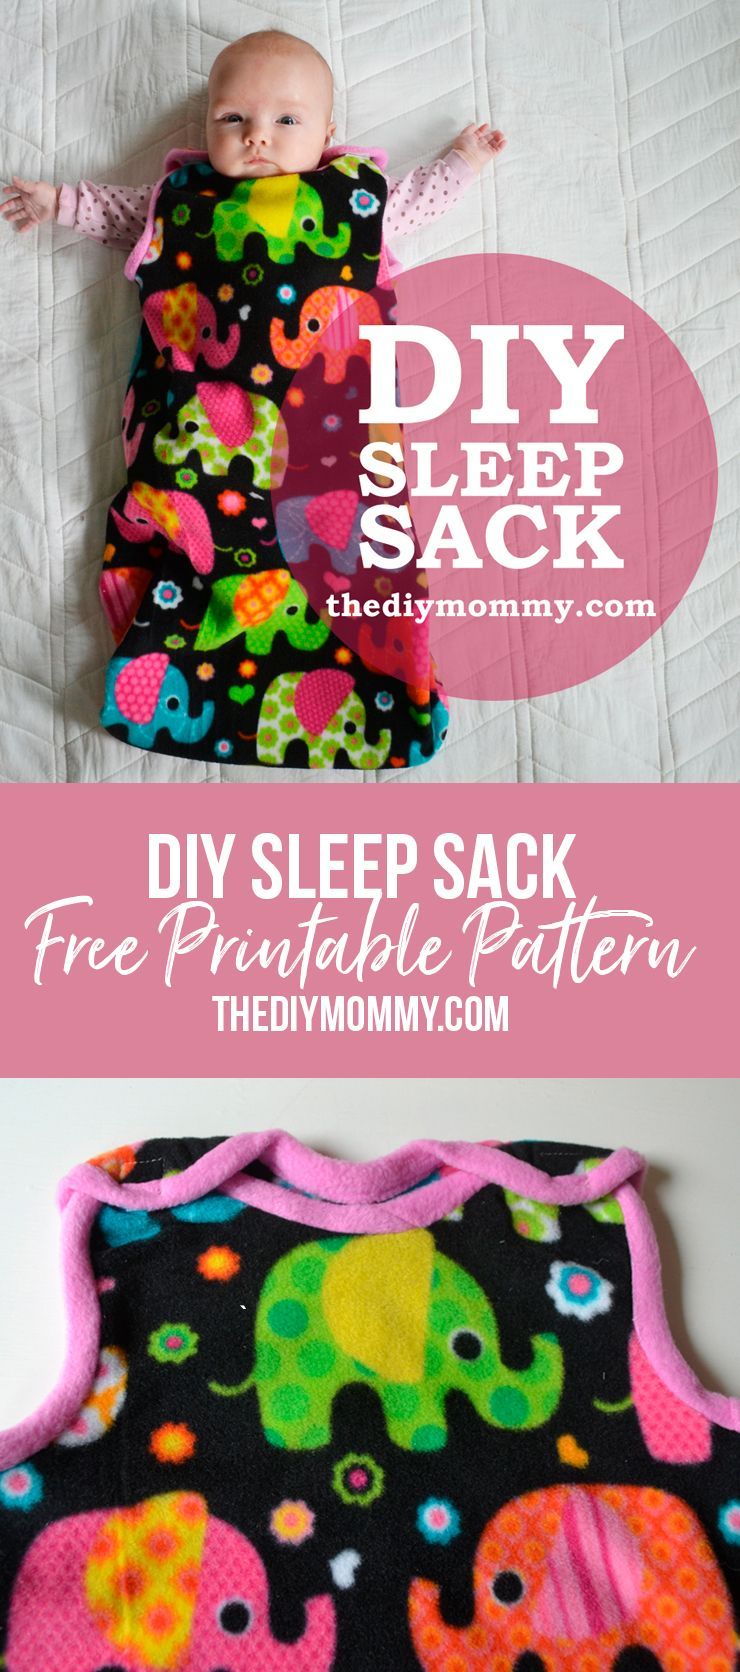 Sew an Easy Baby Sleep Sack - Sew an Easy Baby Sleep Sack -   17 diy Baby sewing ideas